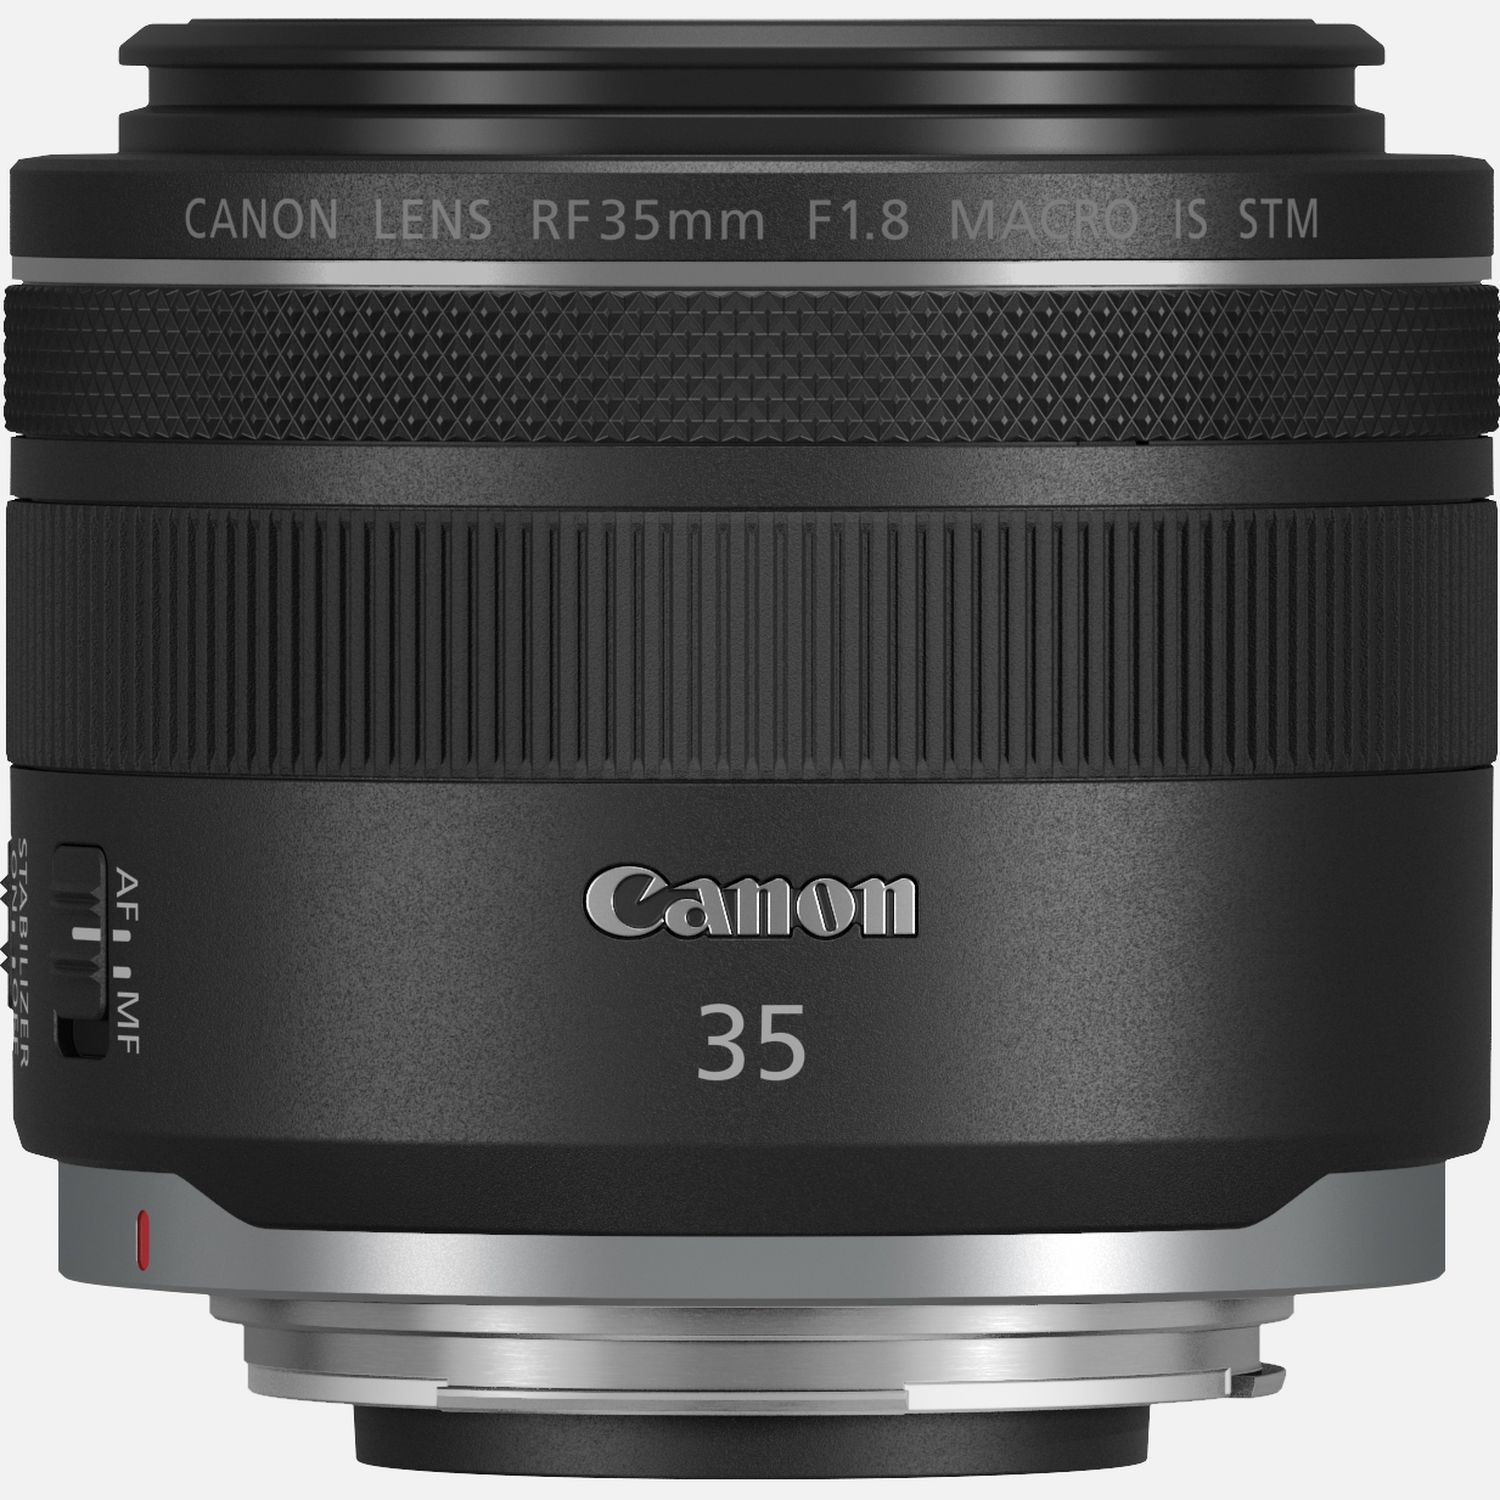 Aparat Canon EOS R5 + obiektyw Canon RF 28-70mm f/2L USM